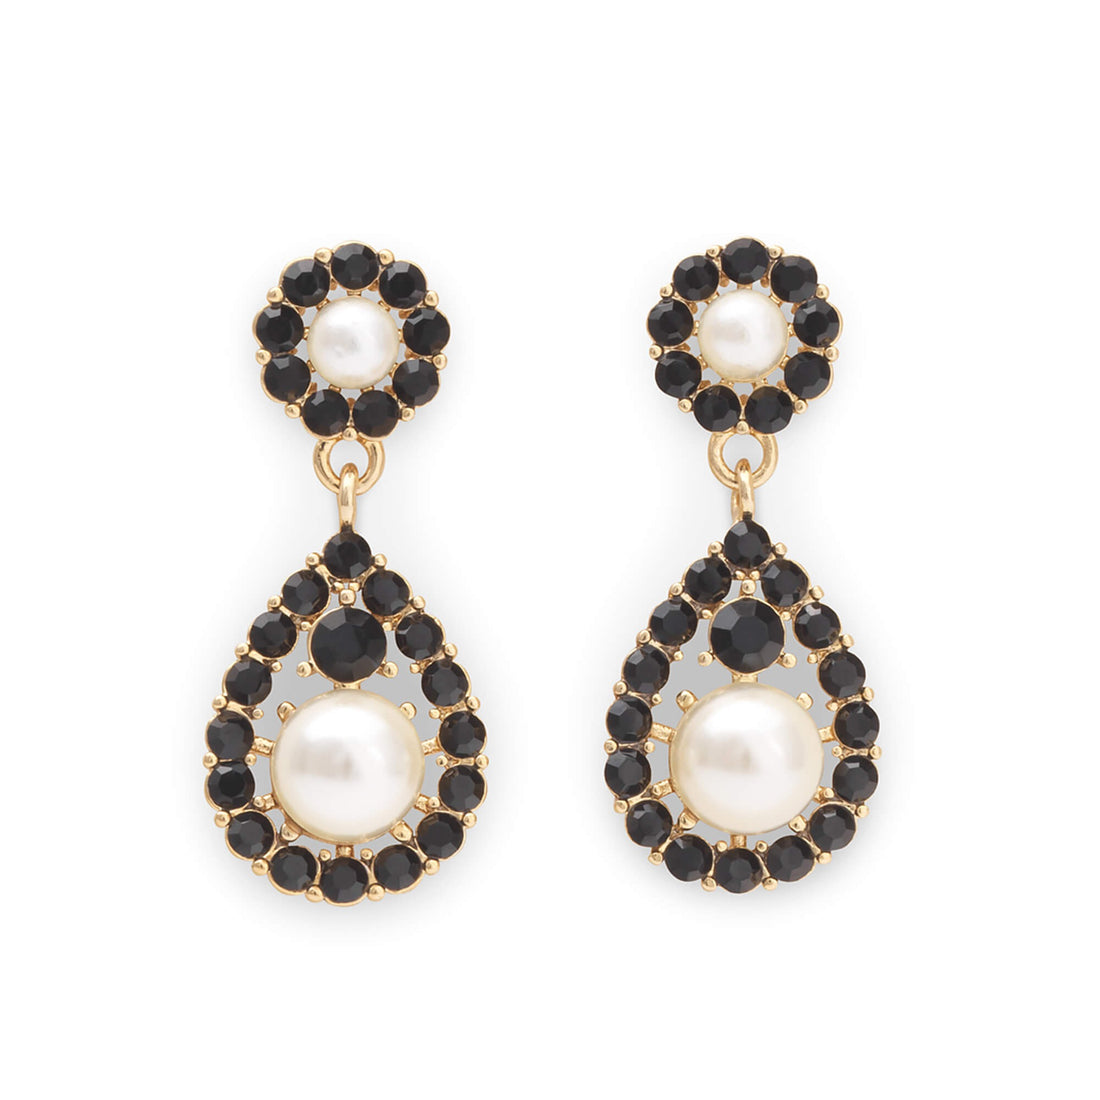 petite-sofia-earrings-ivory-pearl-jet-gold